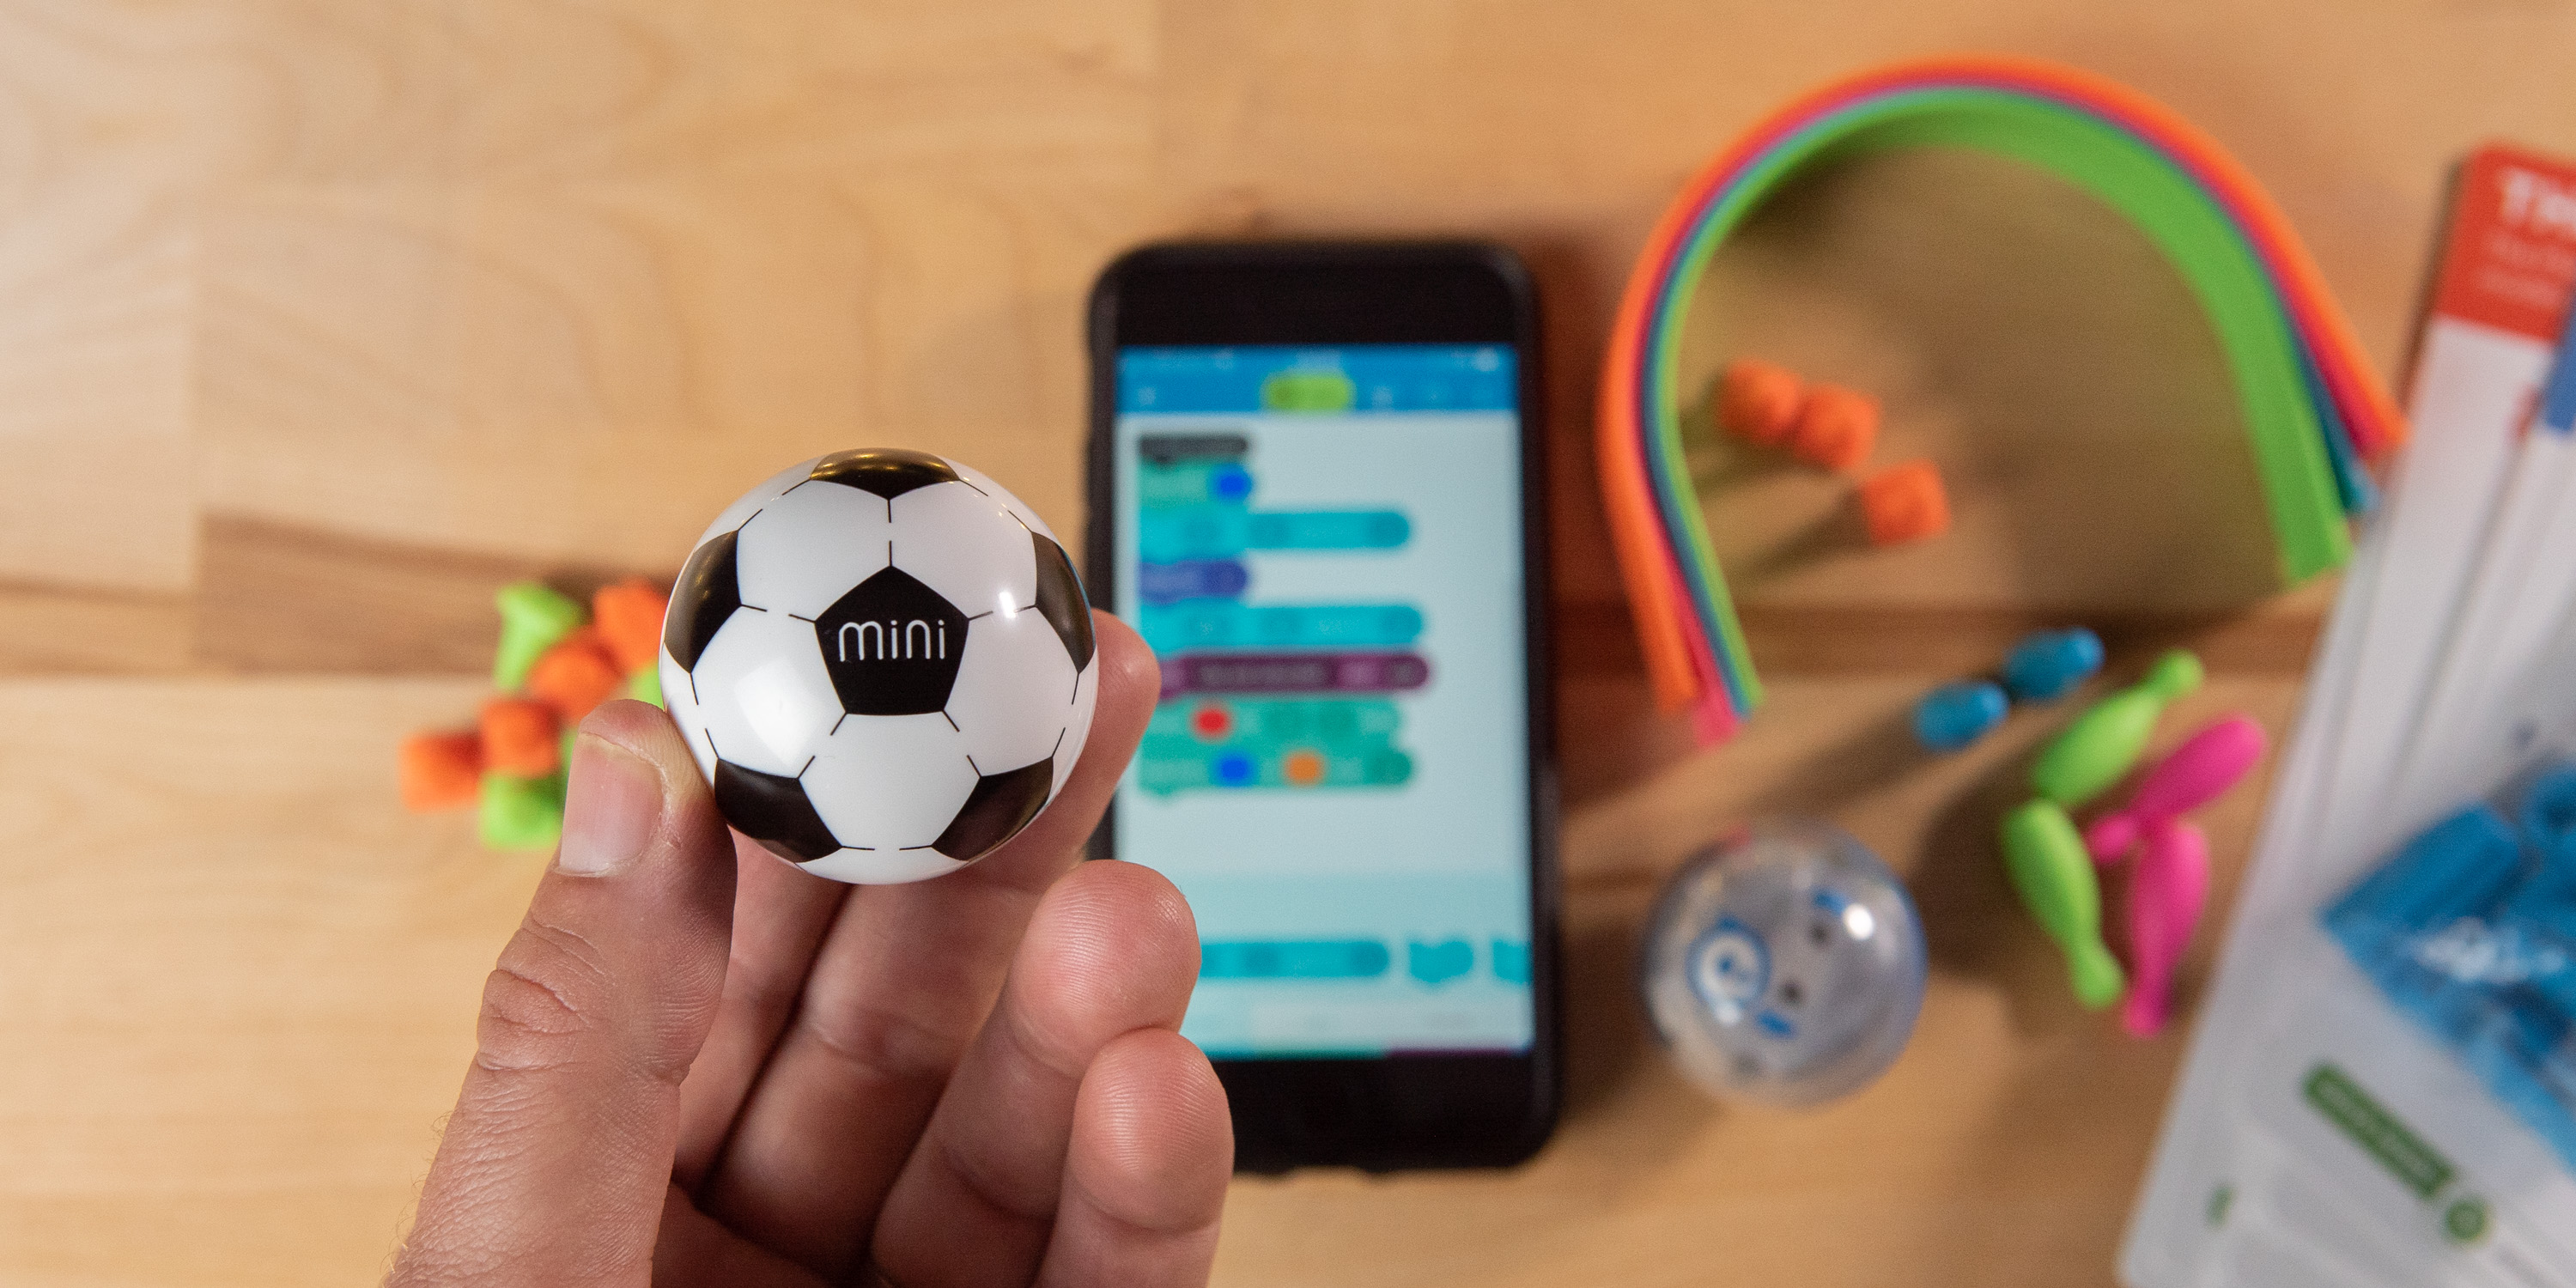 Sphero mini soccer and activity kit